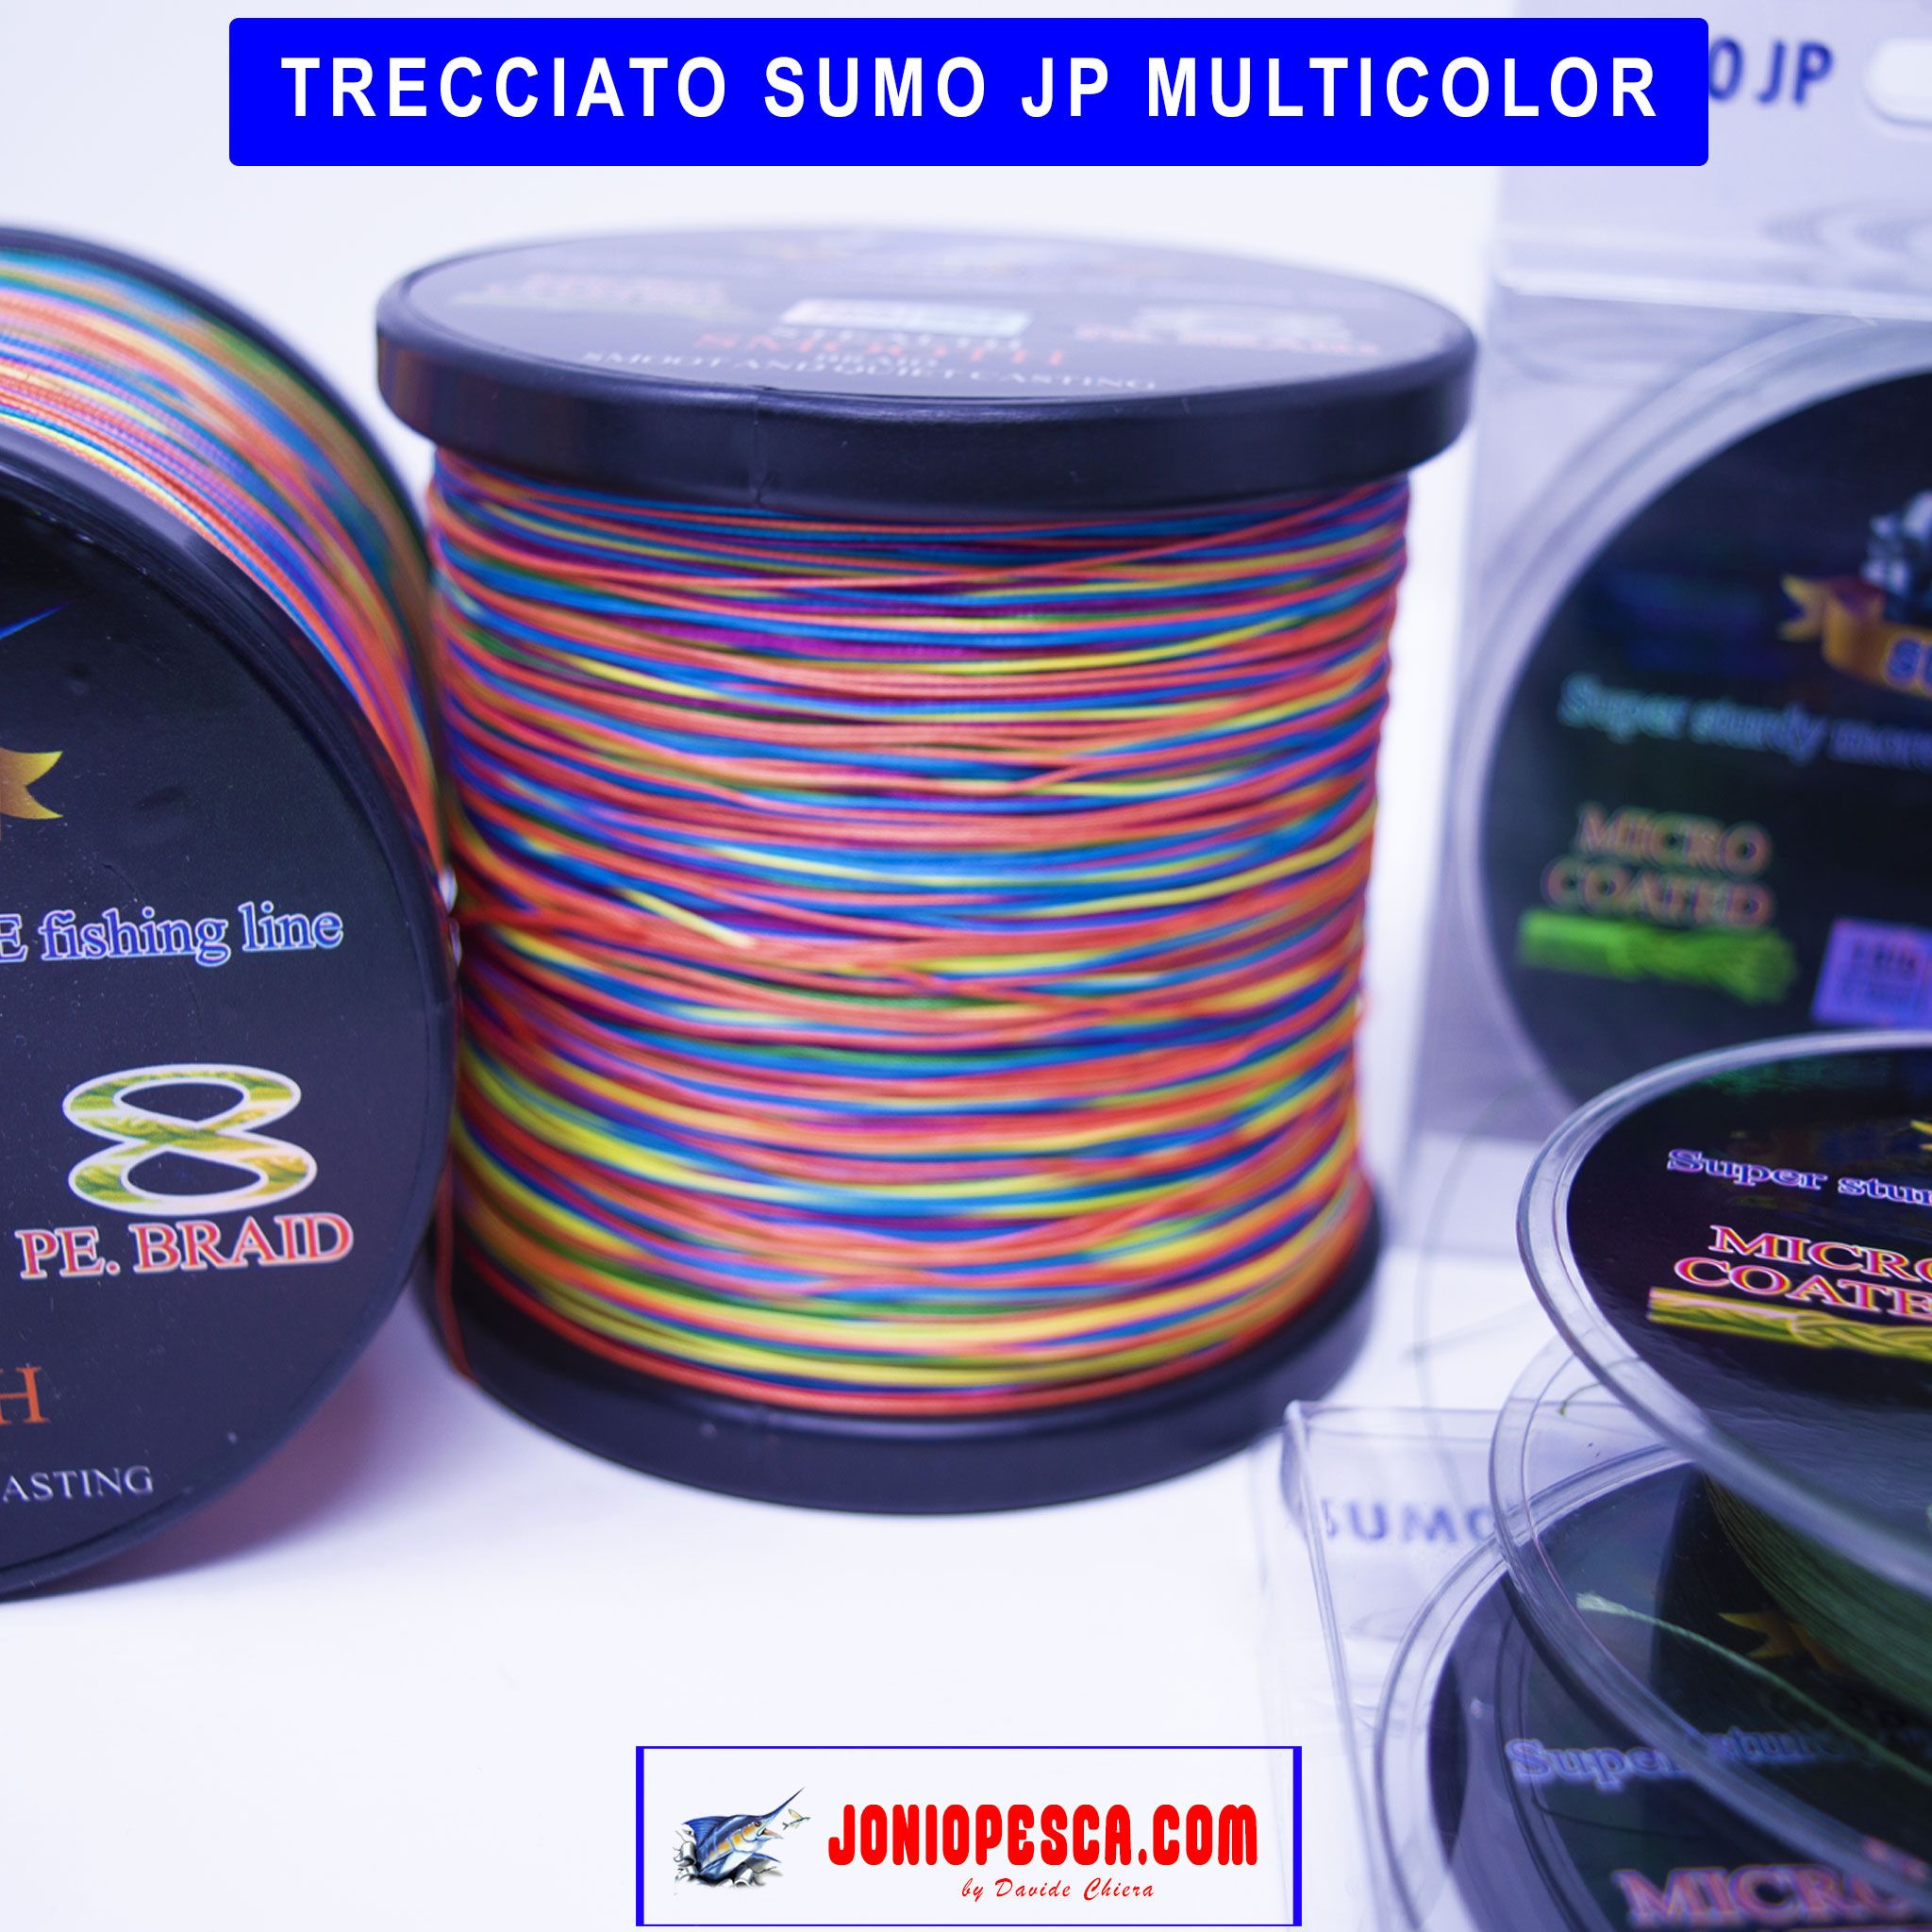 trecciato-sumo-jp-multicolor-3